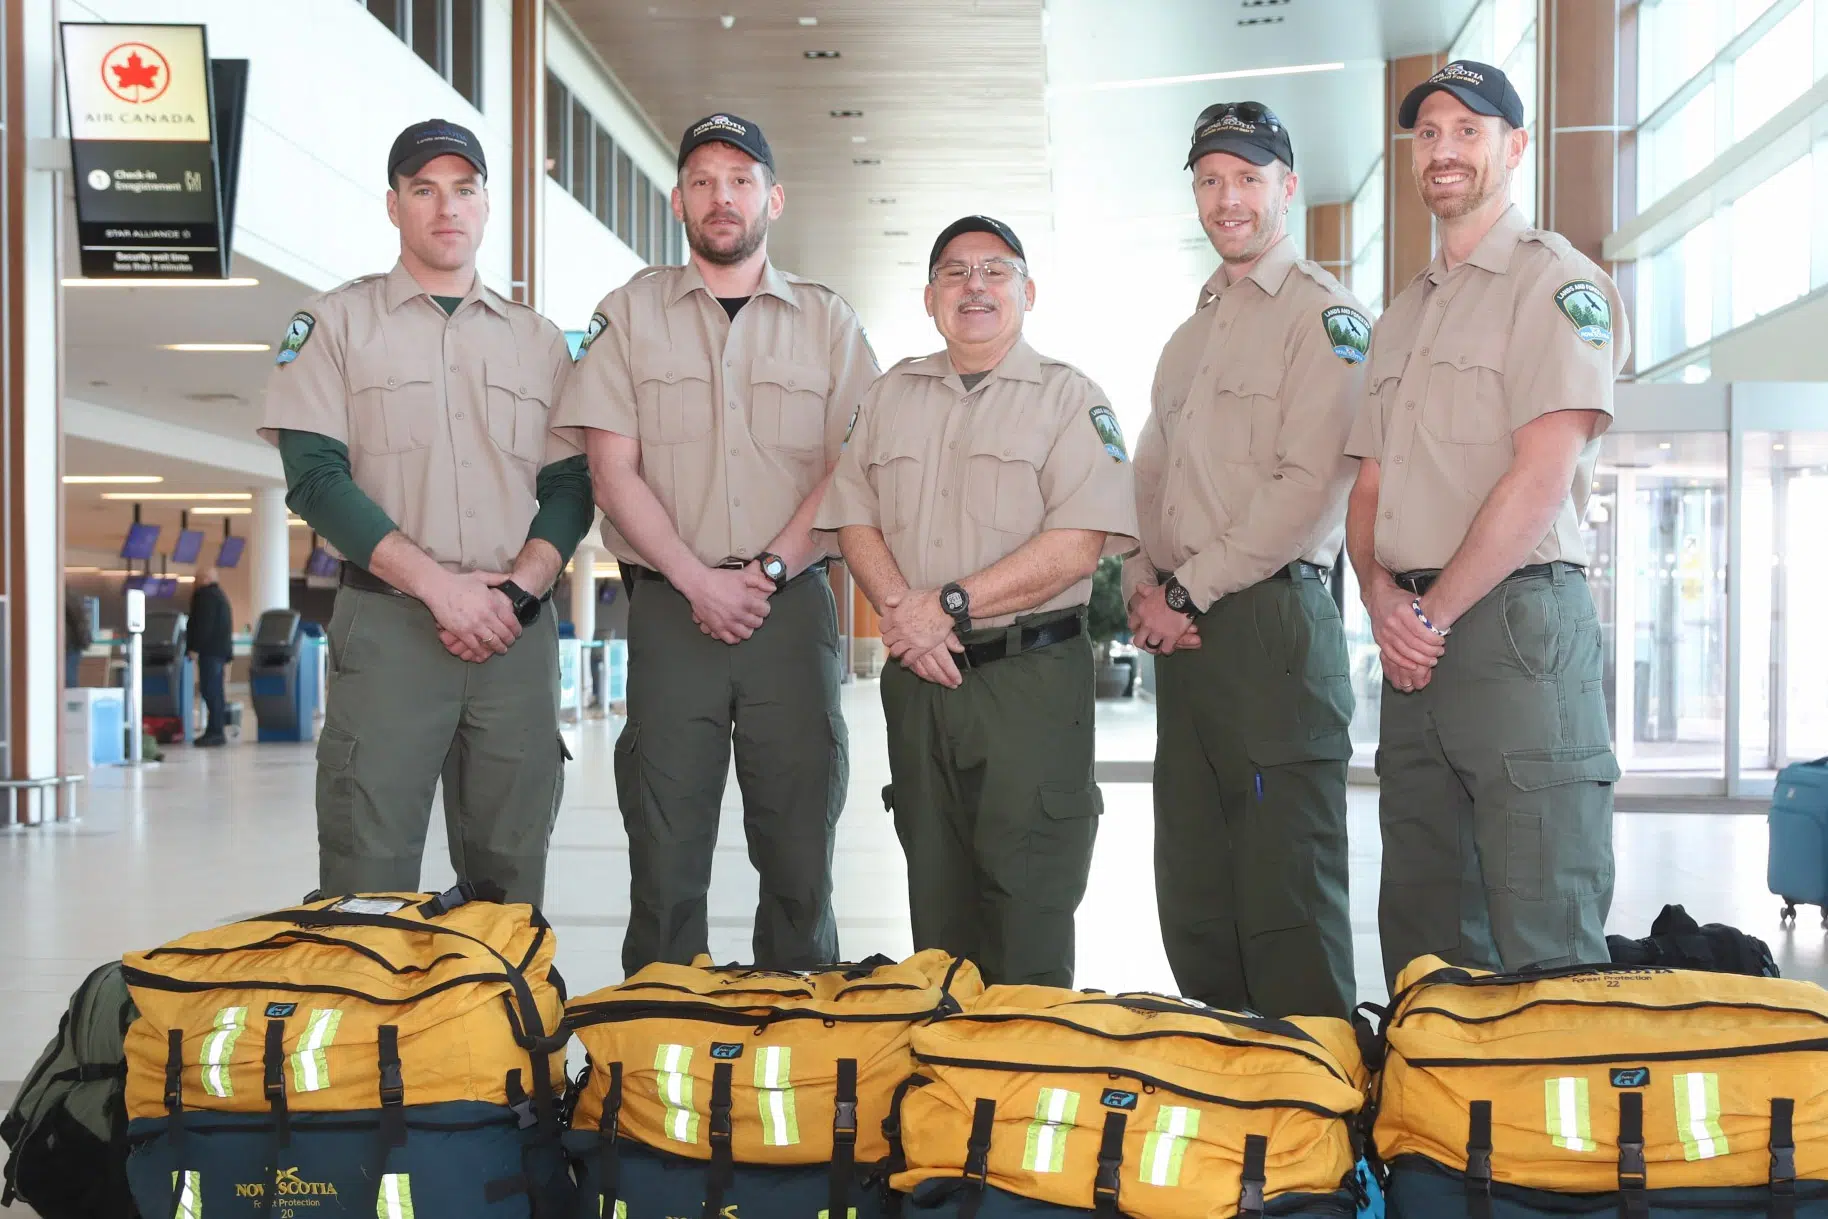 Second Team of Nova Scotia Firefighters Heading To Australia.